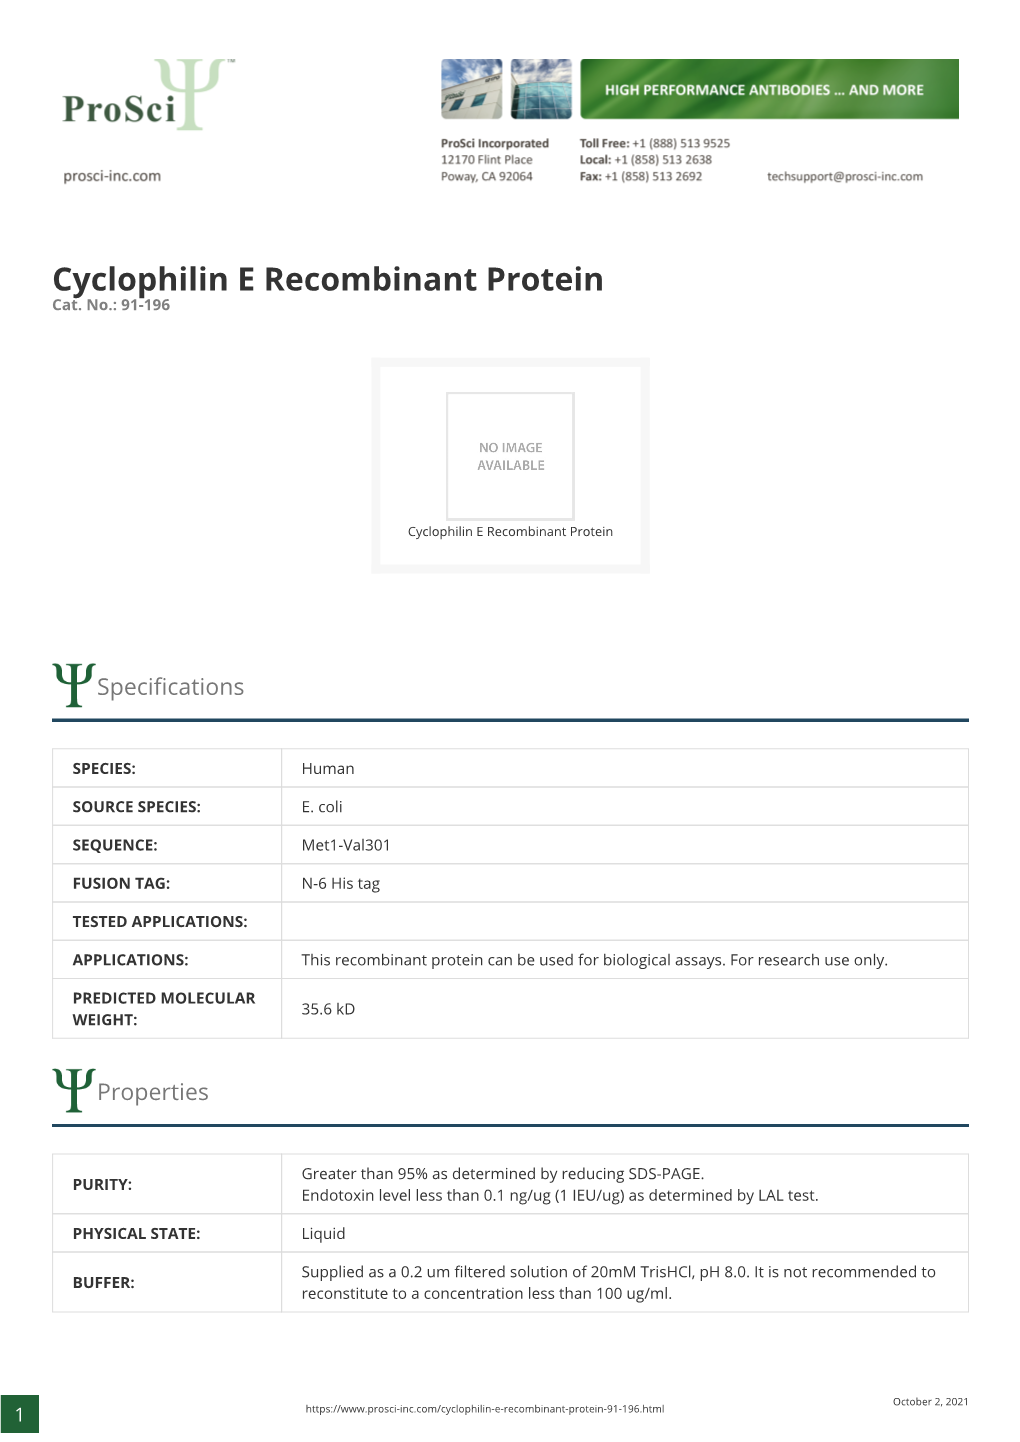 Cyclophilin E Recombinant Protein Cat